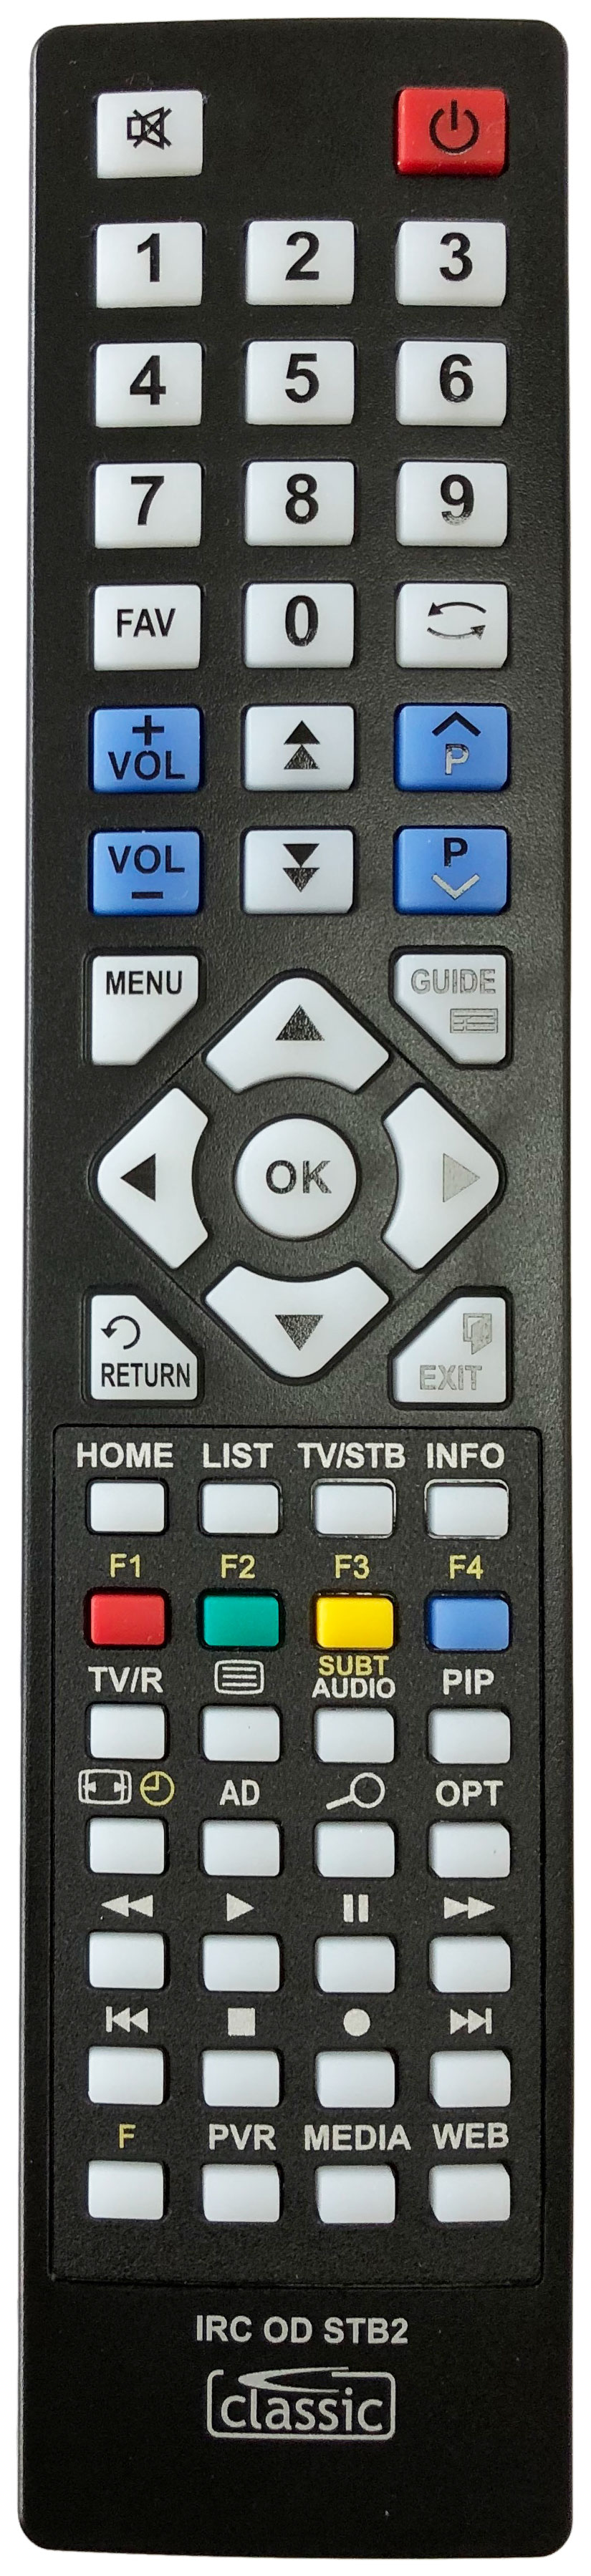 THOMSON THS811 Remote Control Alternative